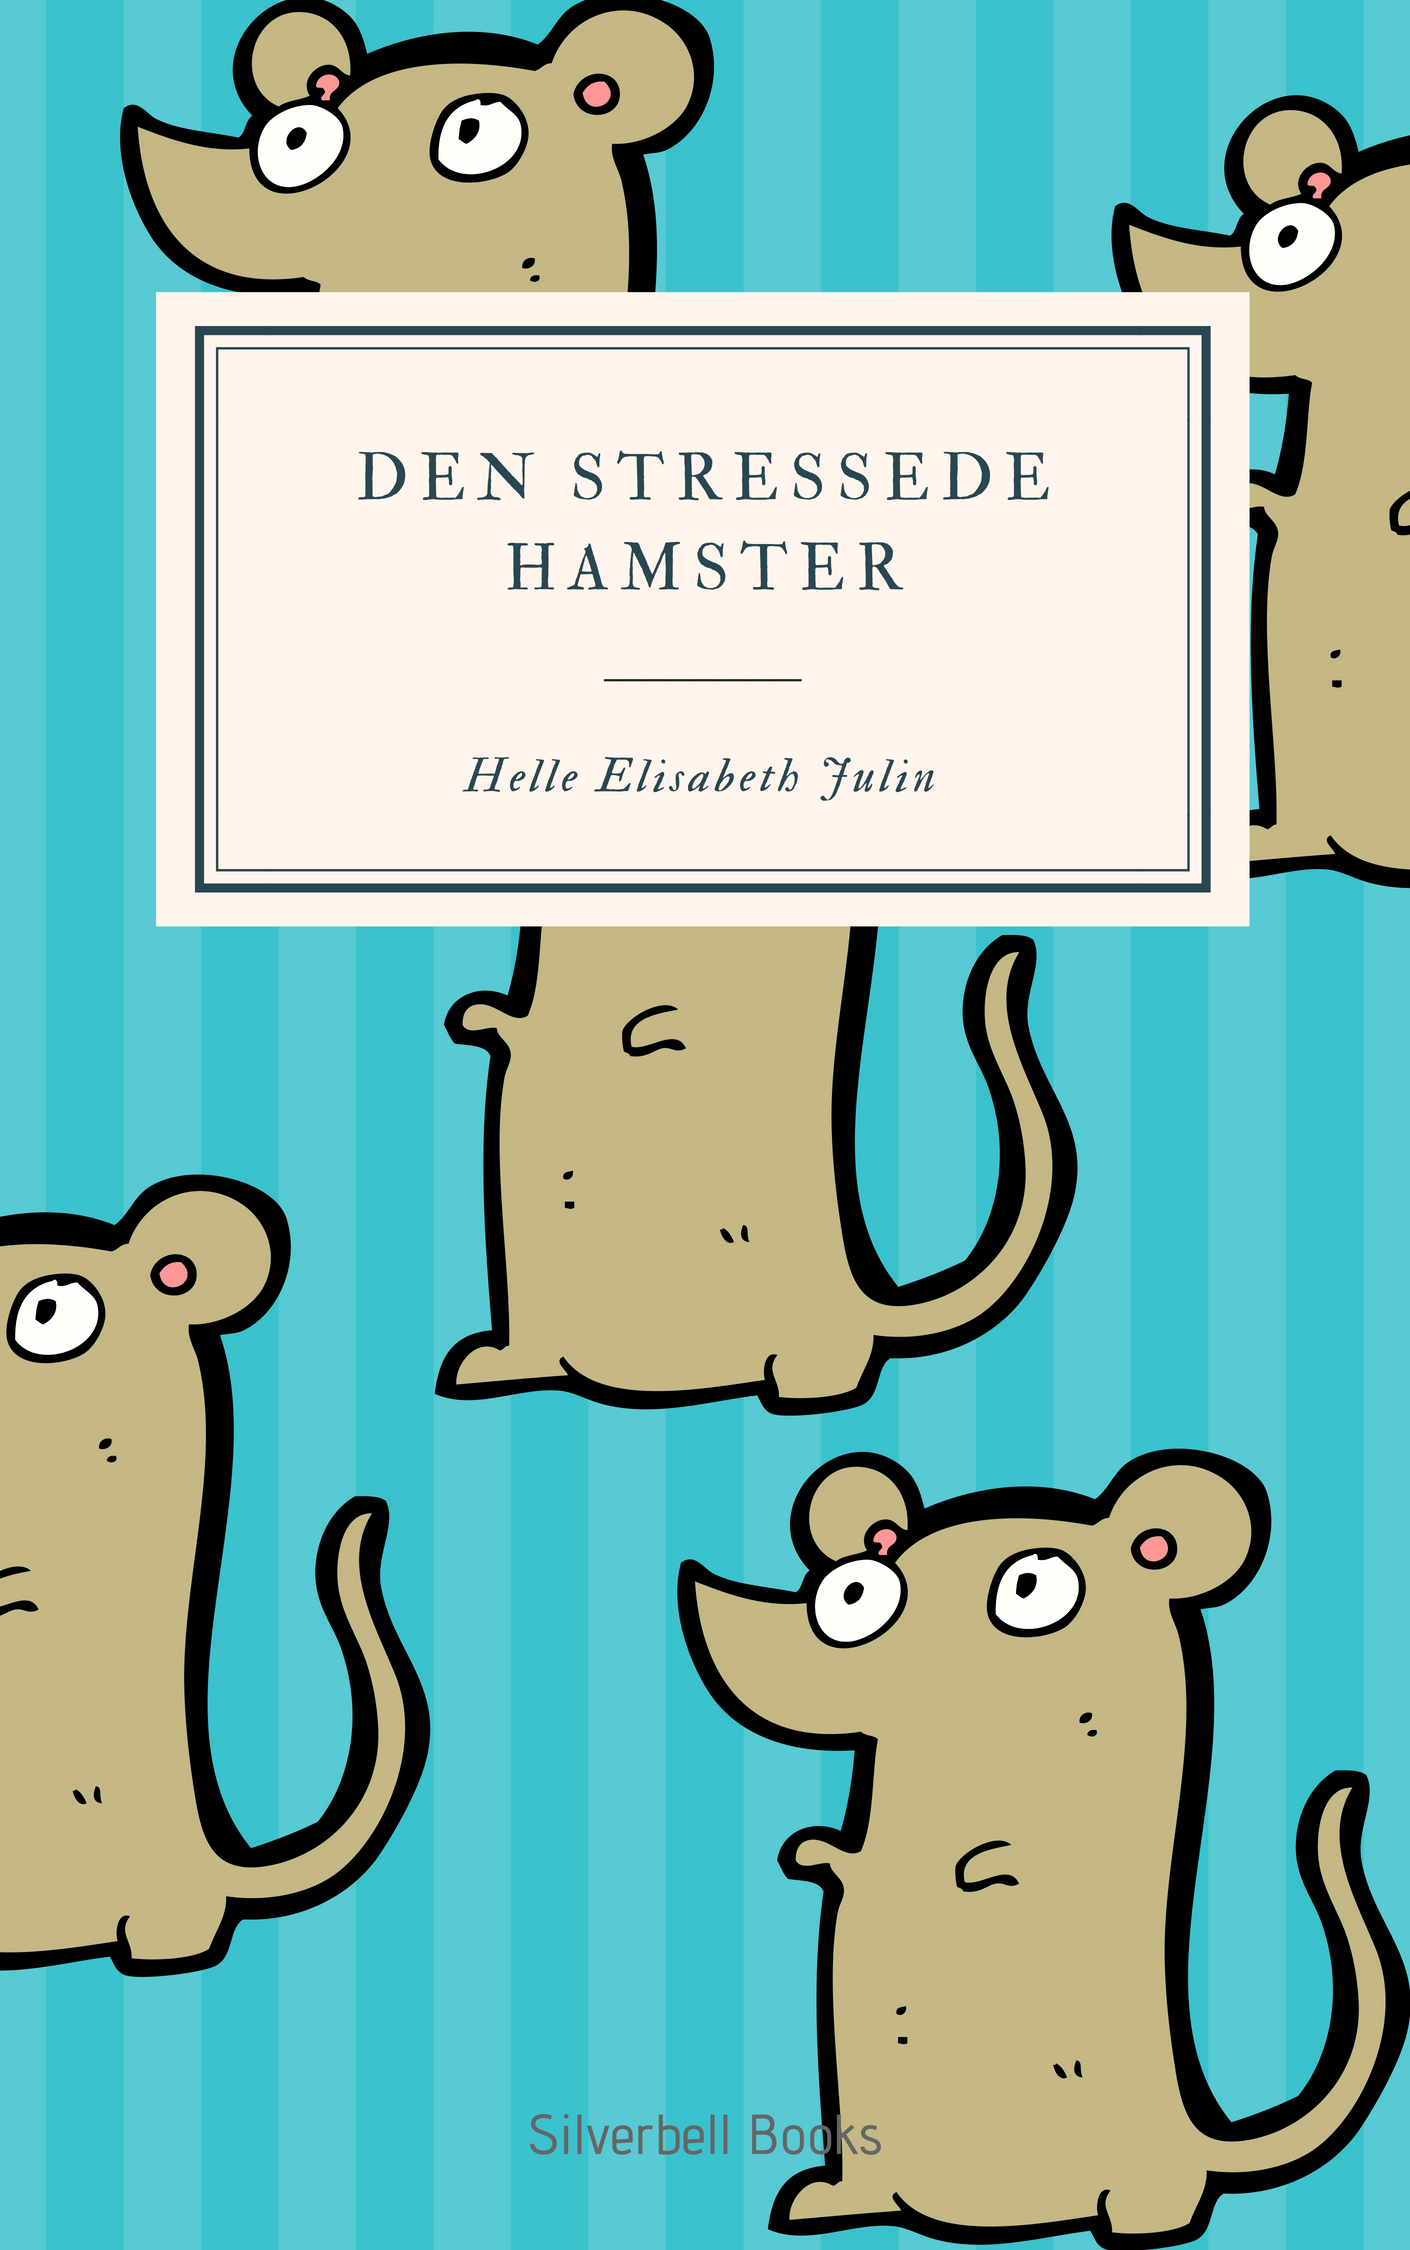 Copy of Den stressede hamster